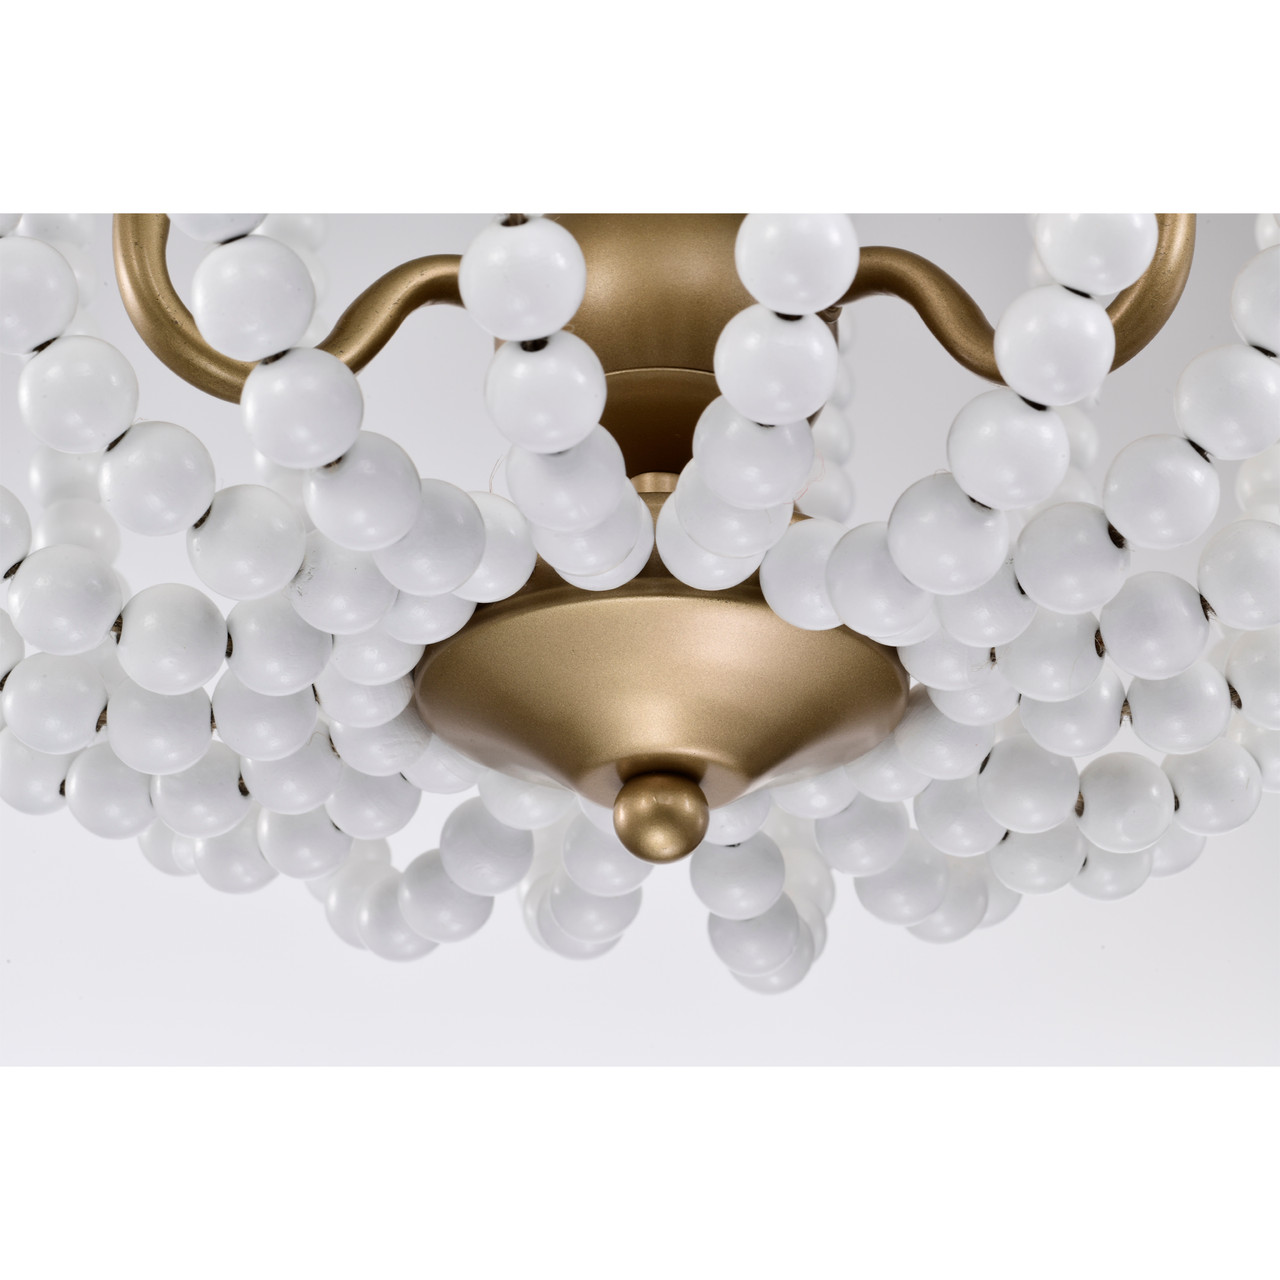 WAREHOUSE OF TIFFANY'S IMC834/3 Taha 15 in. 4-Light Indoor Gloss White and Brass Finish Flush Mount Ceiling Light with Light Kit